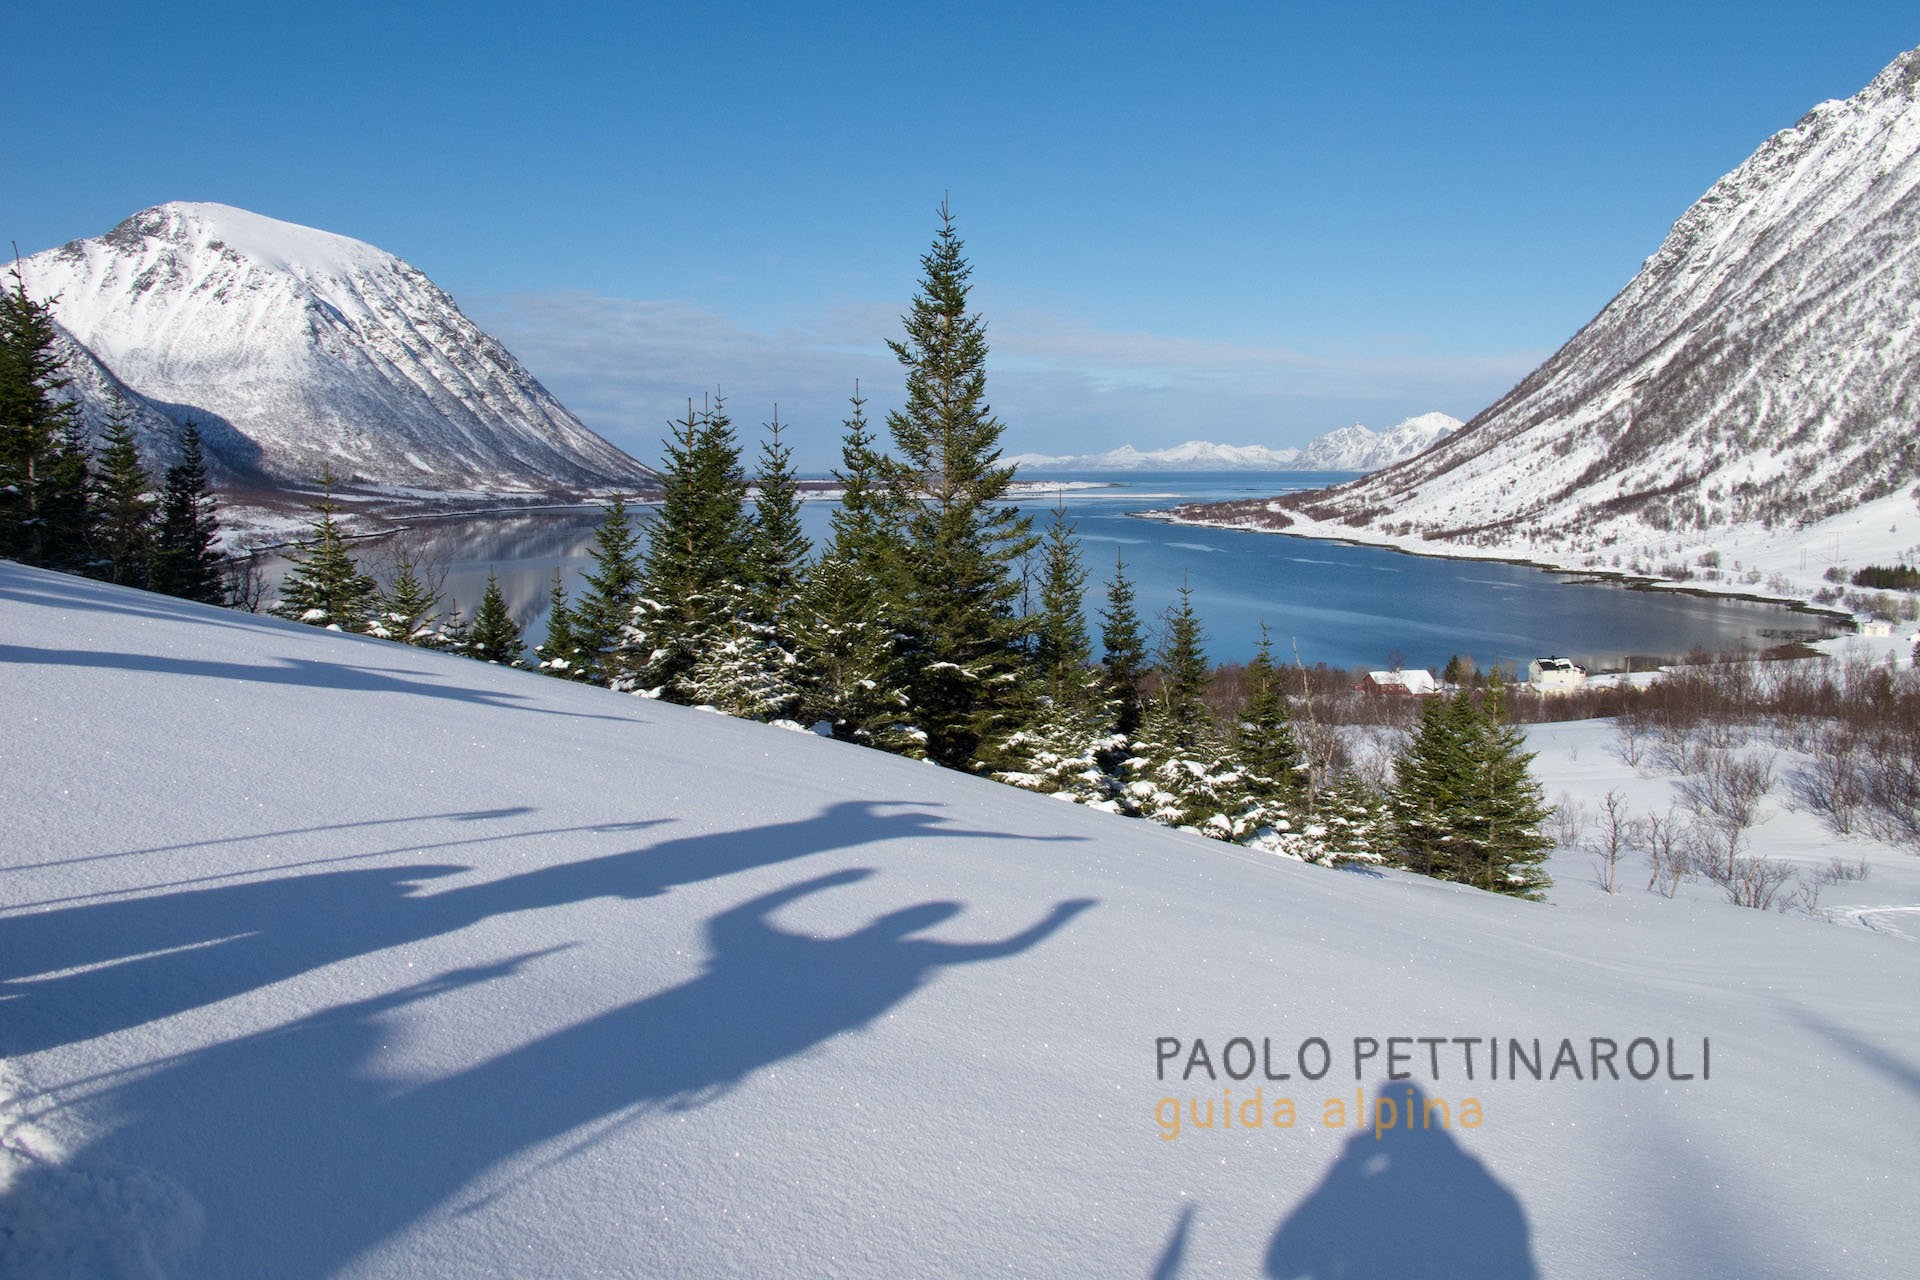 IMG_4045-panorami_paolo pettinaroli guida alpina